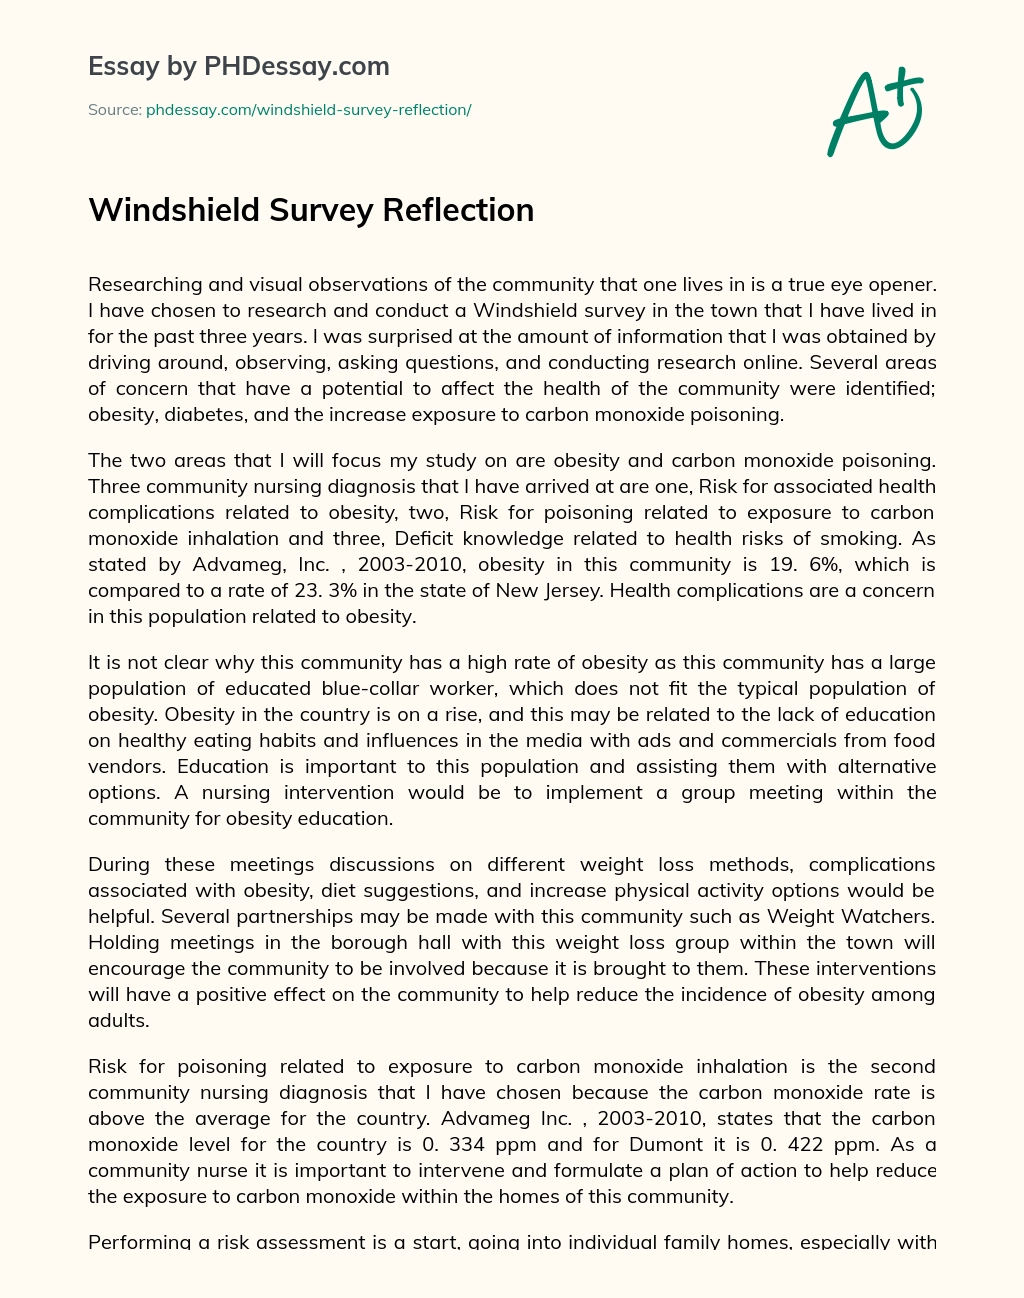 Windshield Survey Reflection essay